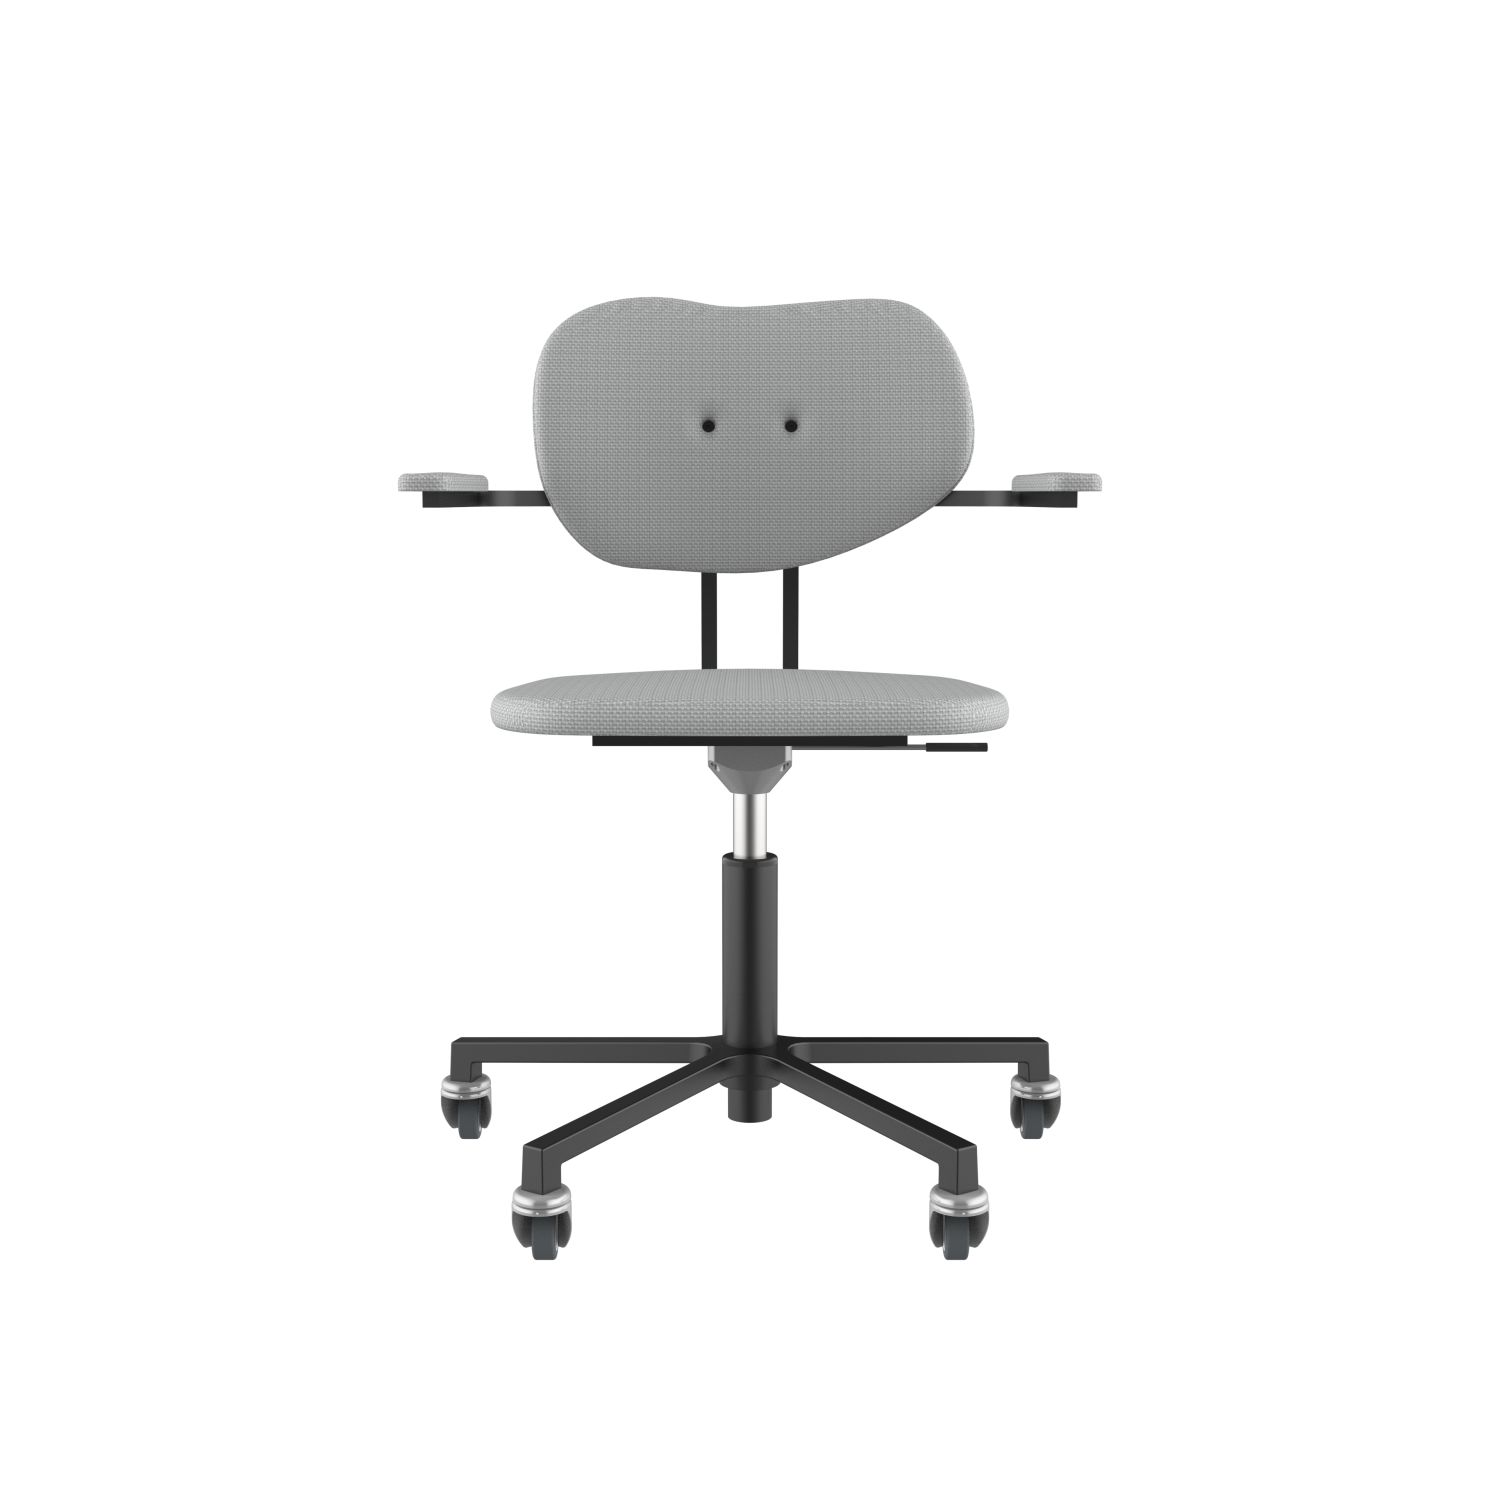 lensvelt maarten baas office chair with armrests backrest b breeze light grey 171 black ral9005 soft wheels